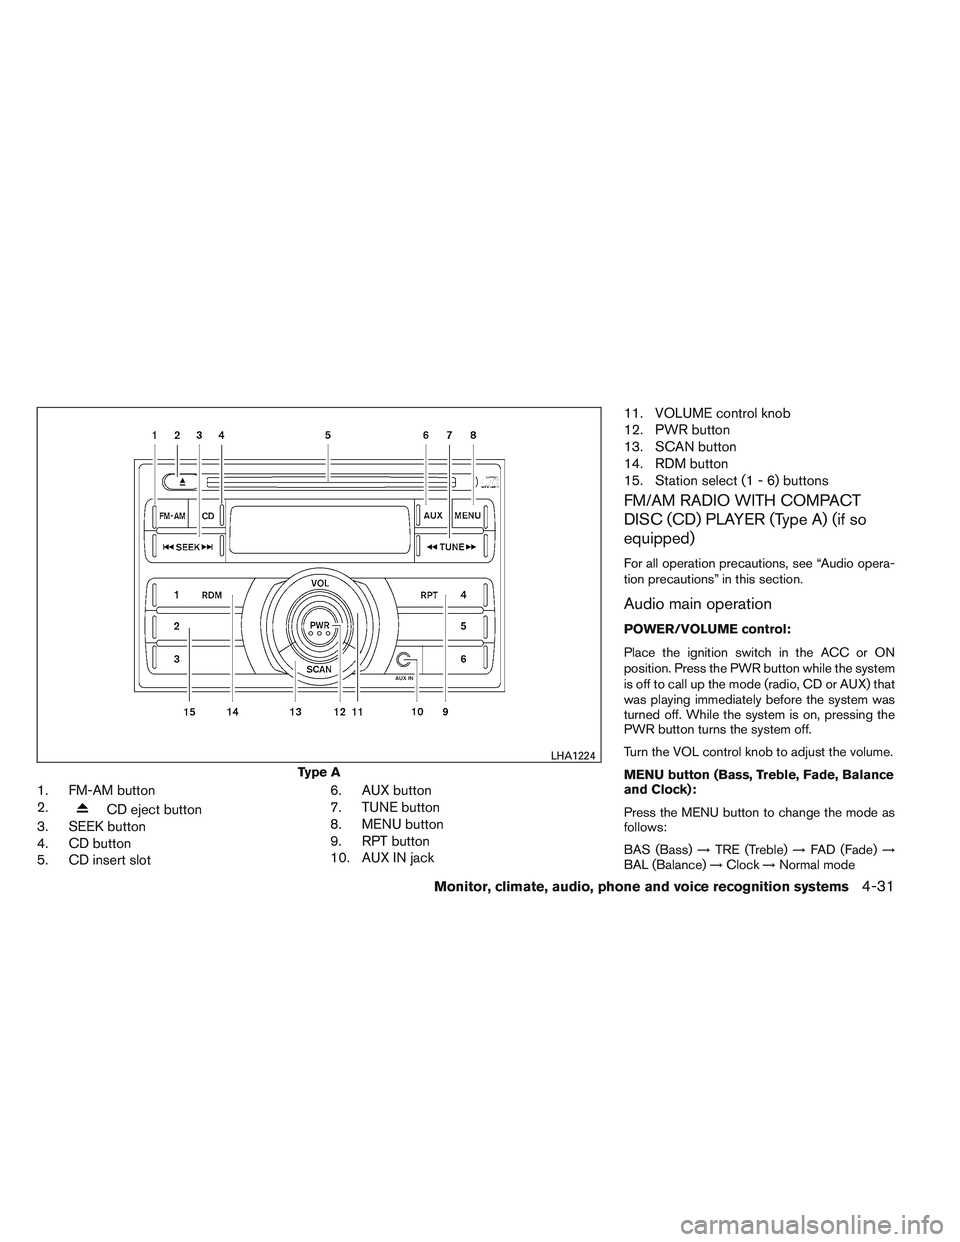 NISSAN VERSA 2014 User Guide 1. FM-AM button
2.
CD eject button
3. SEEK button
4. CD button
5. CD insert slot 6. AUX button
7. TUNE button
8. MENU button
9. RPT button
10. AUX IN jack11. VOLUME control knob
12. PWR button
13. SCA